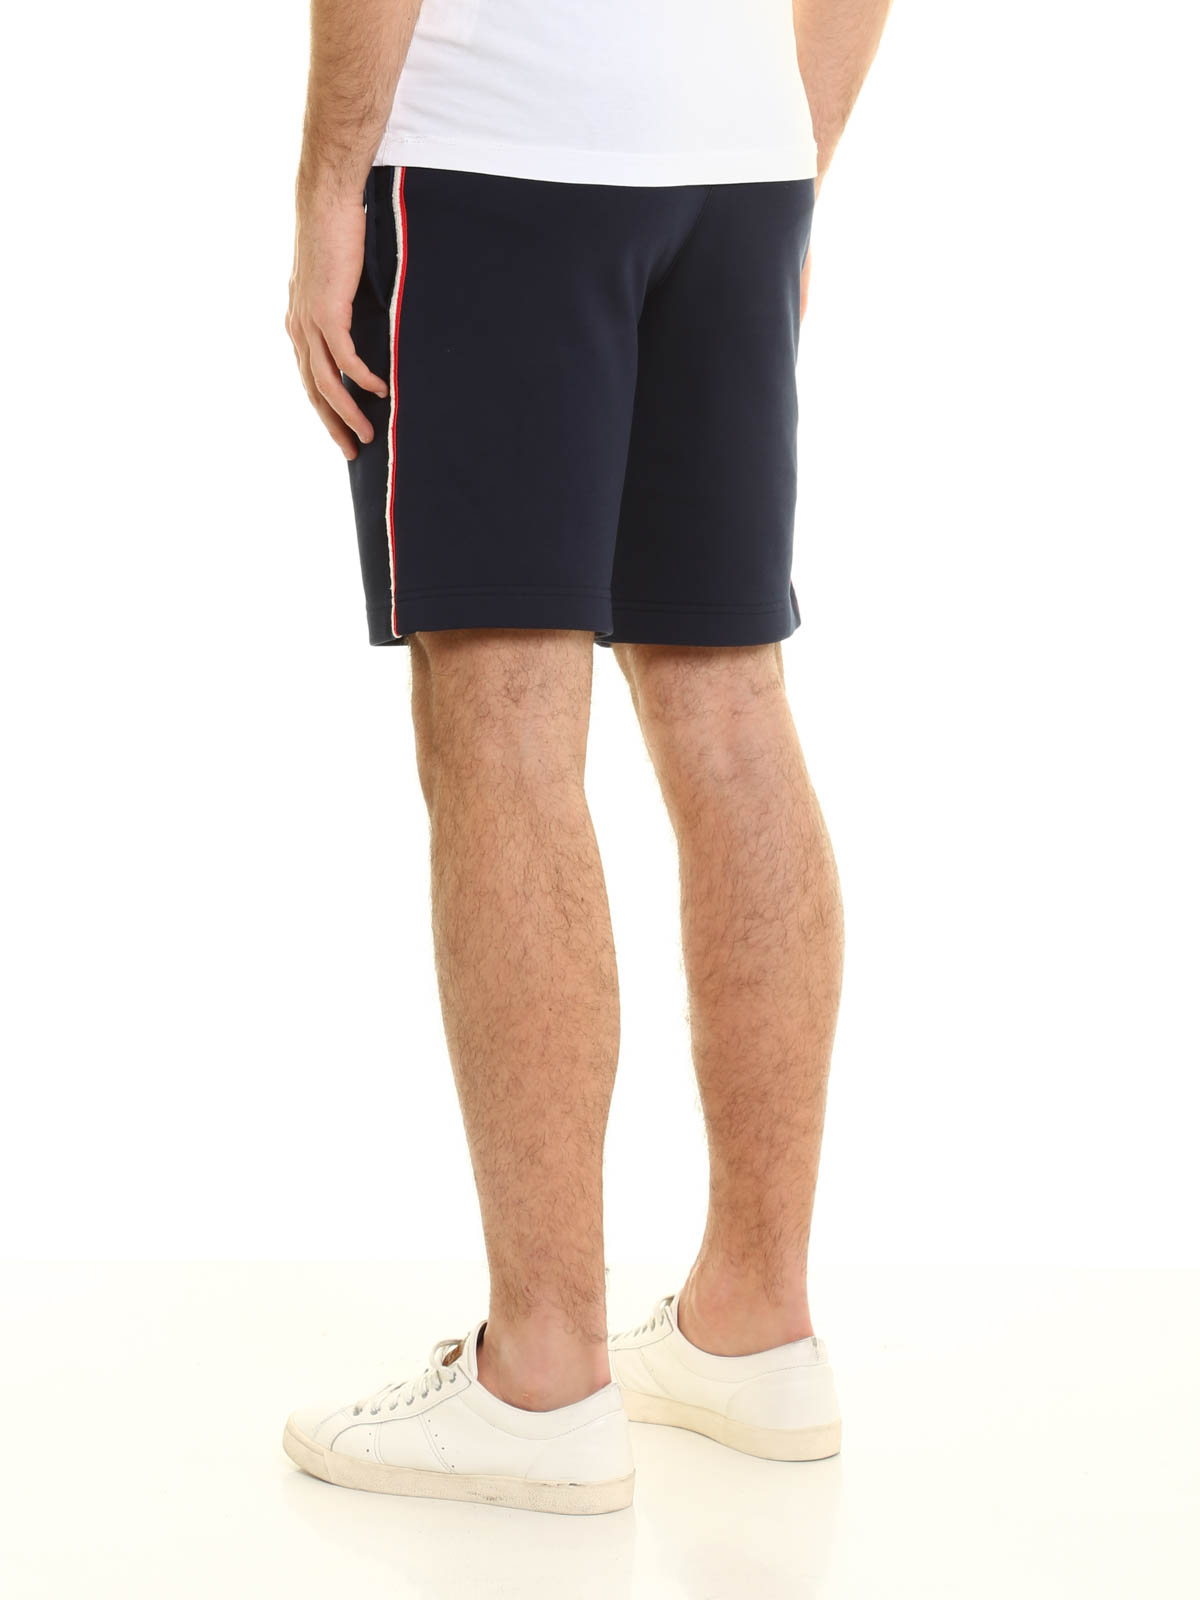 moncler jogger shorts